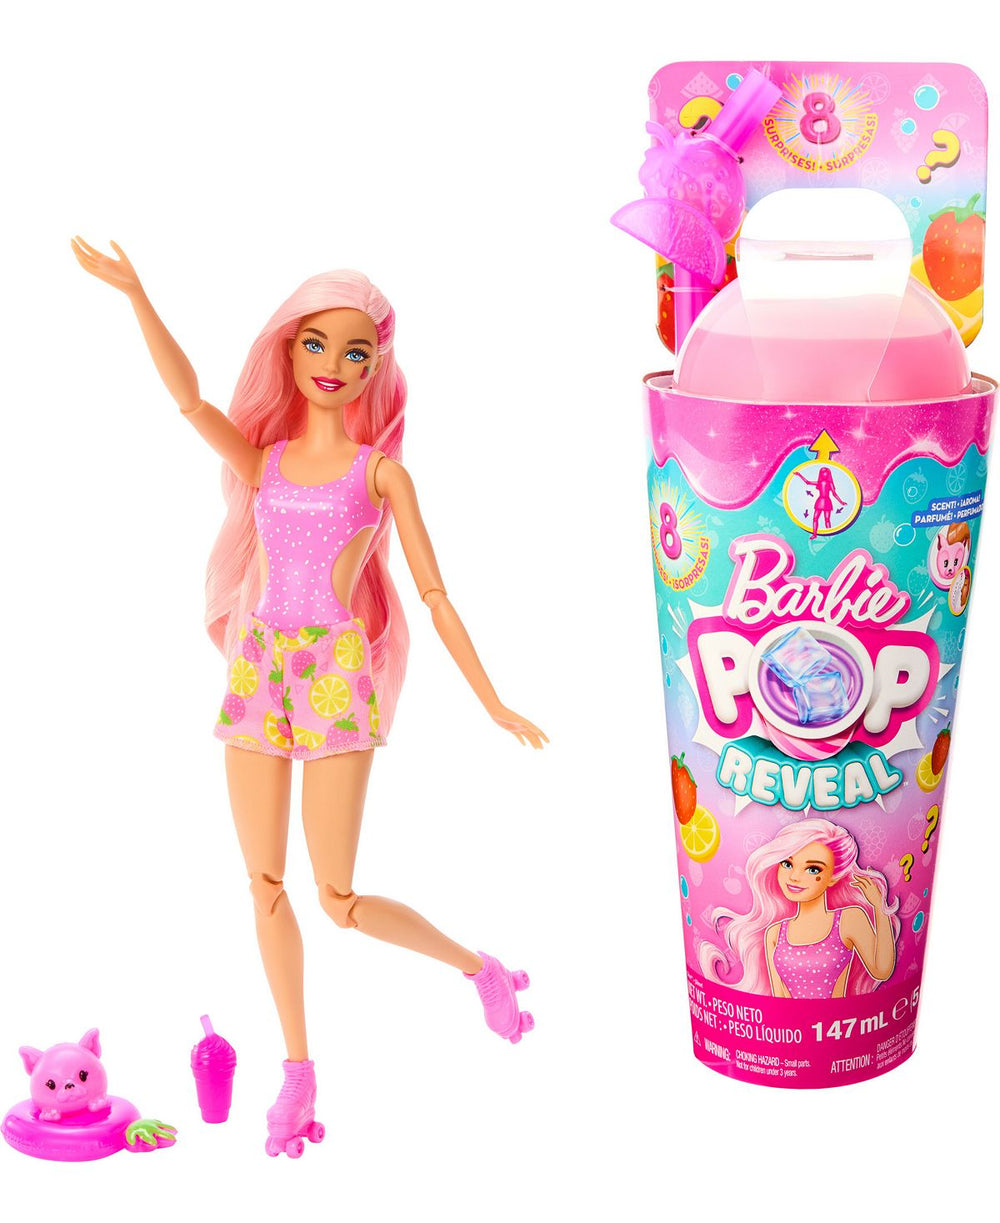 Barbie Pop Reveal Fruit Series - Strawberry Lemonade Doll with 8 Surprises